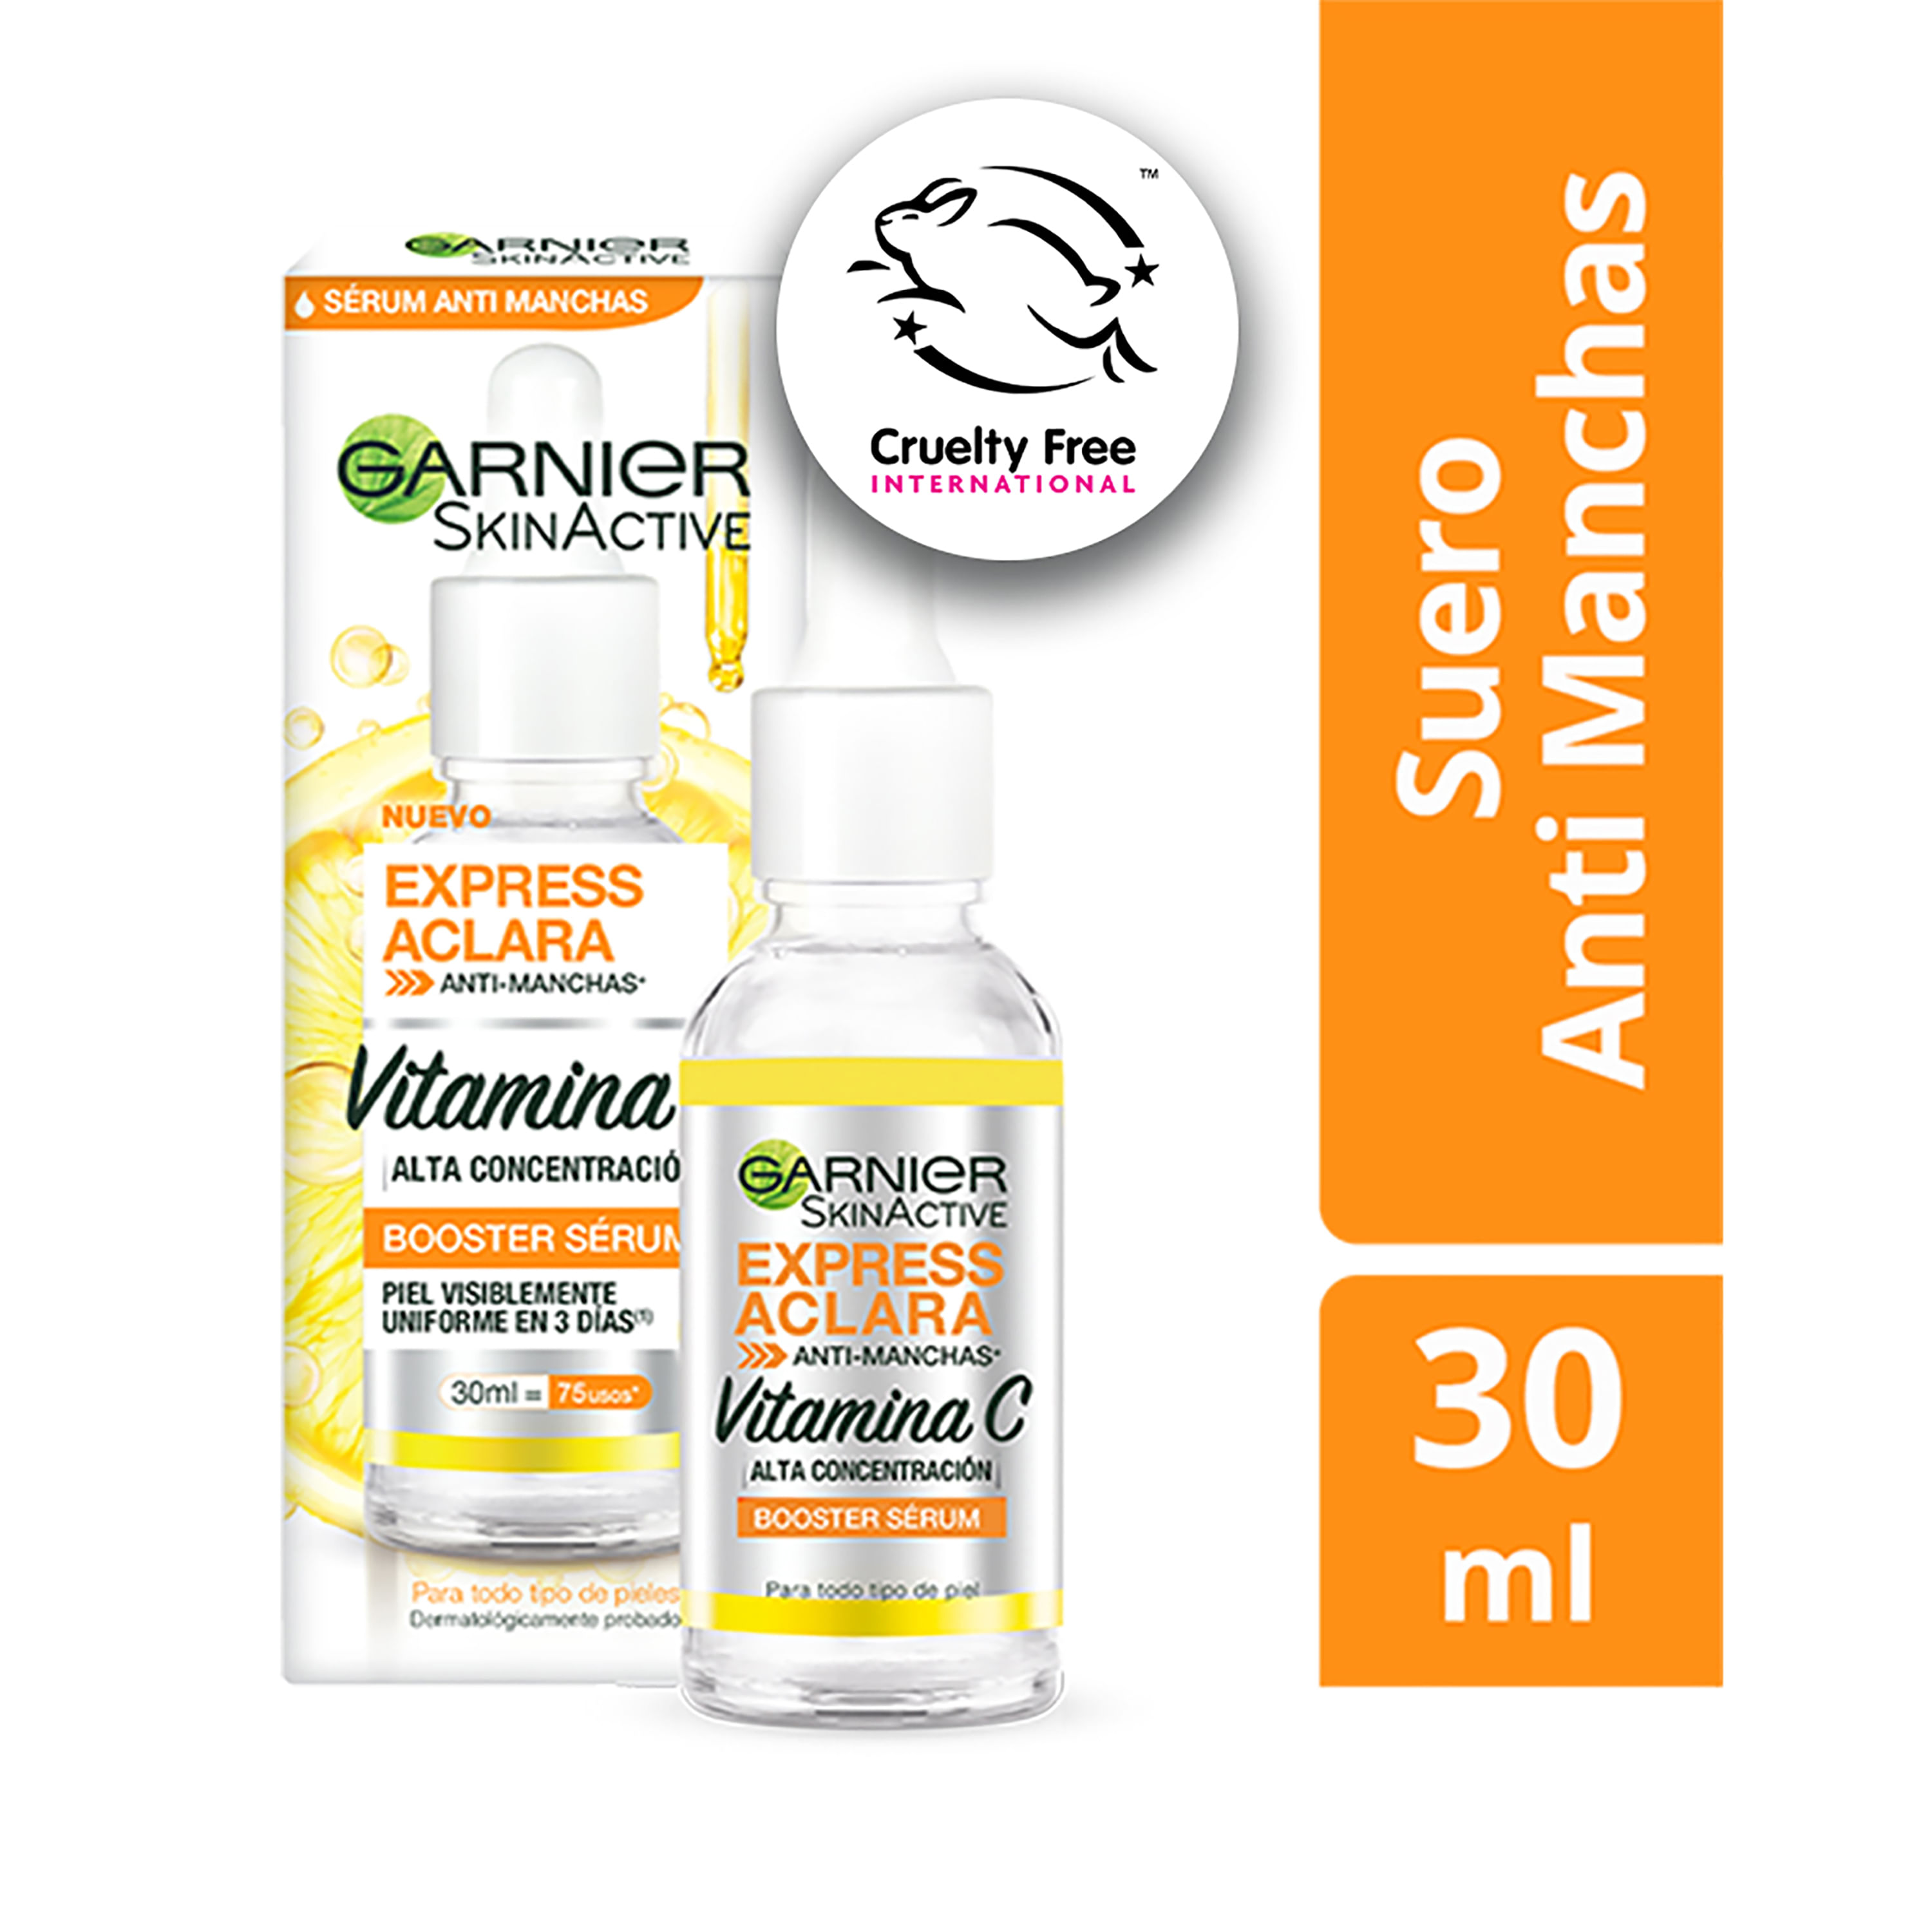 Express-Aclara-Serum-Antimanchas-Garnier-Vitamina-C-30ml-1-22053